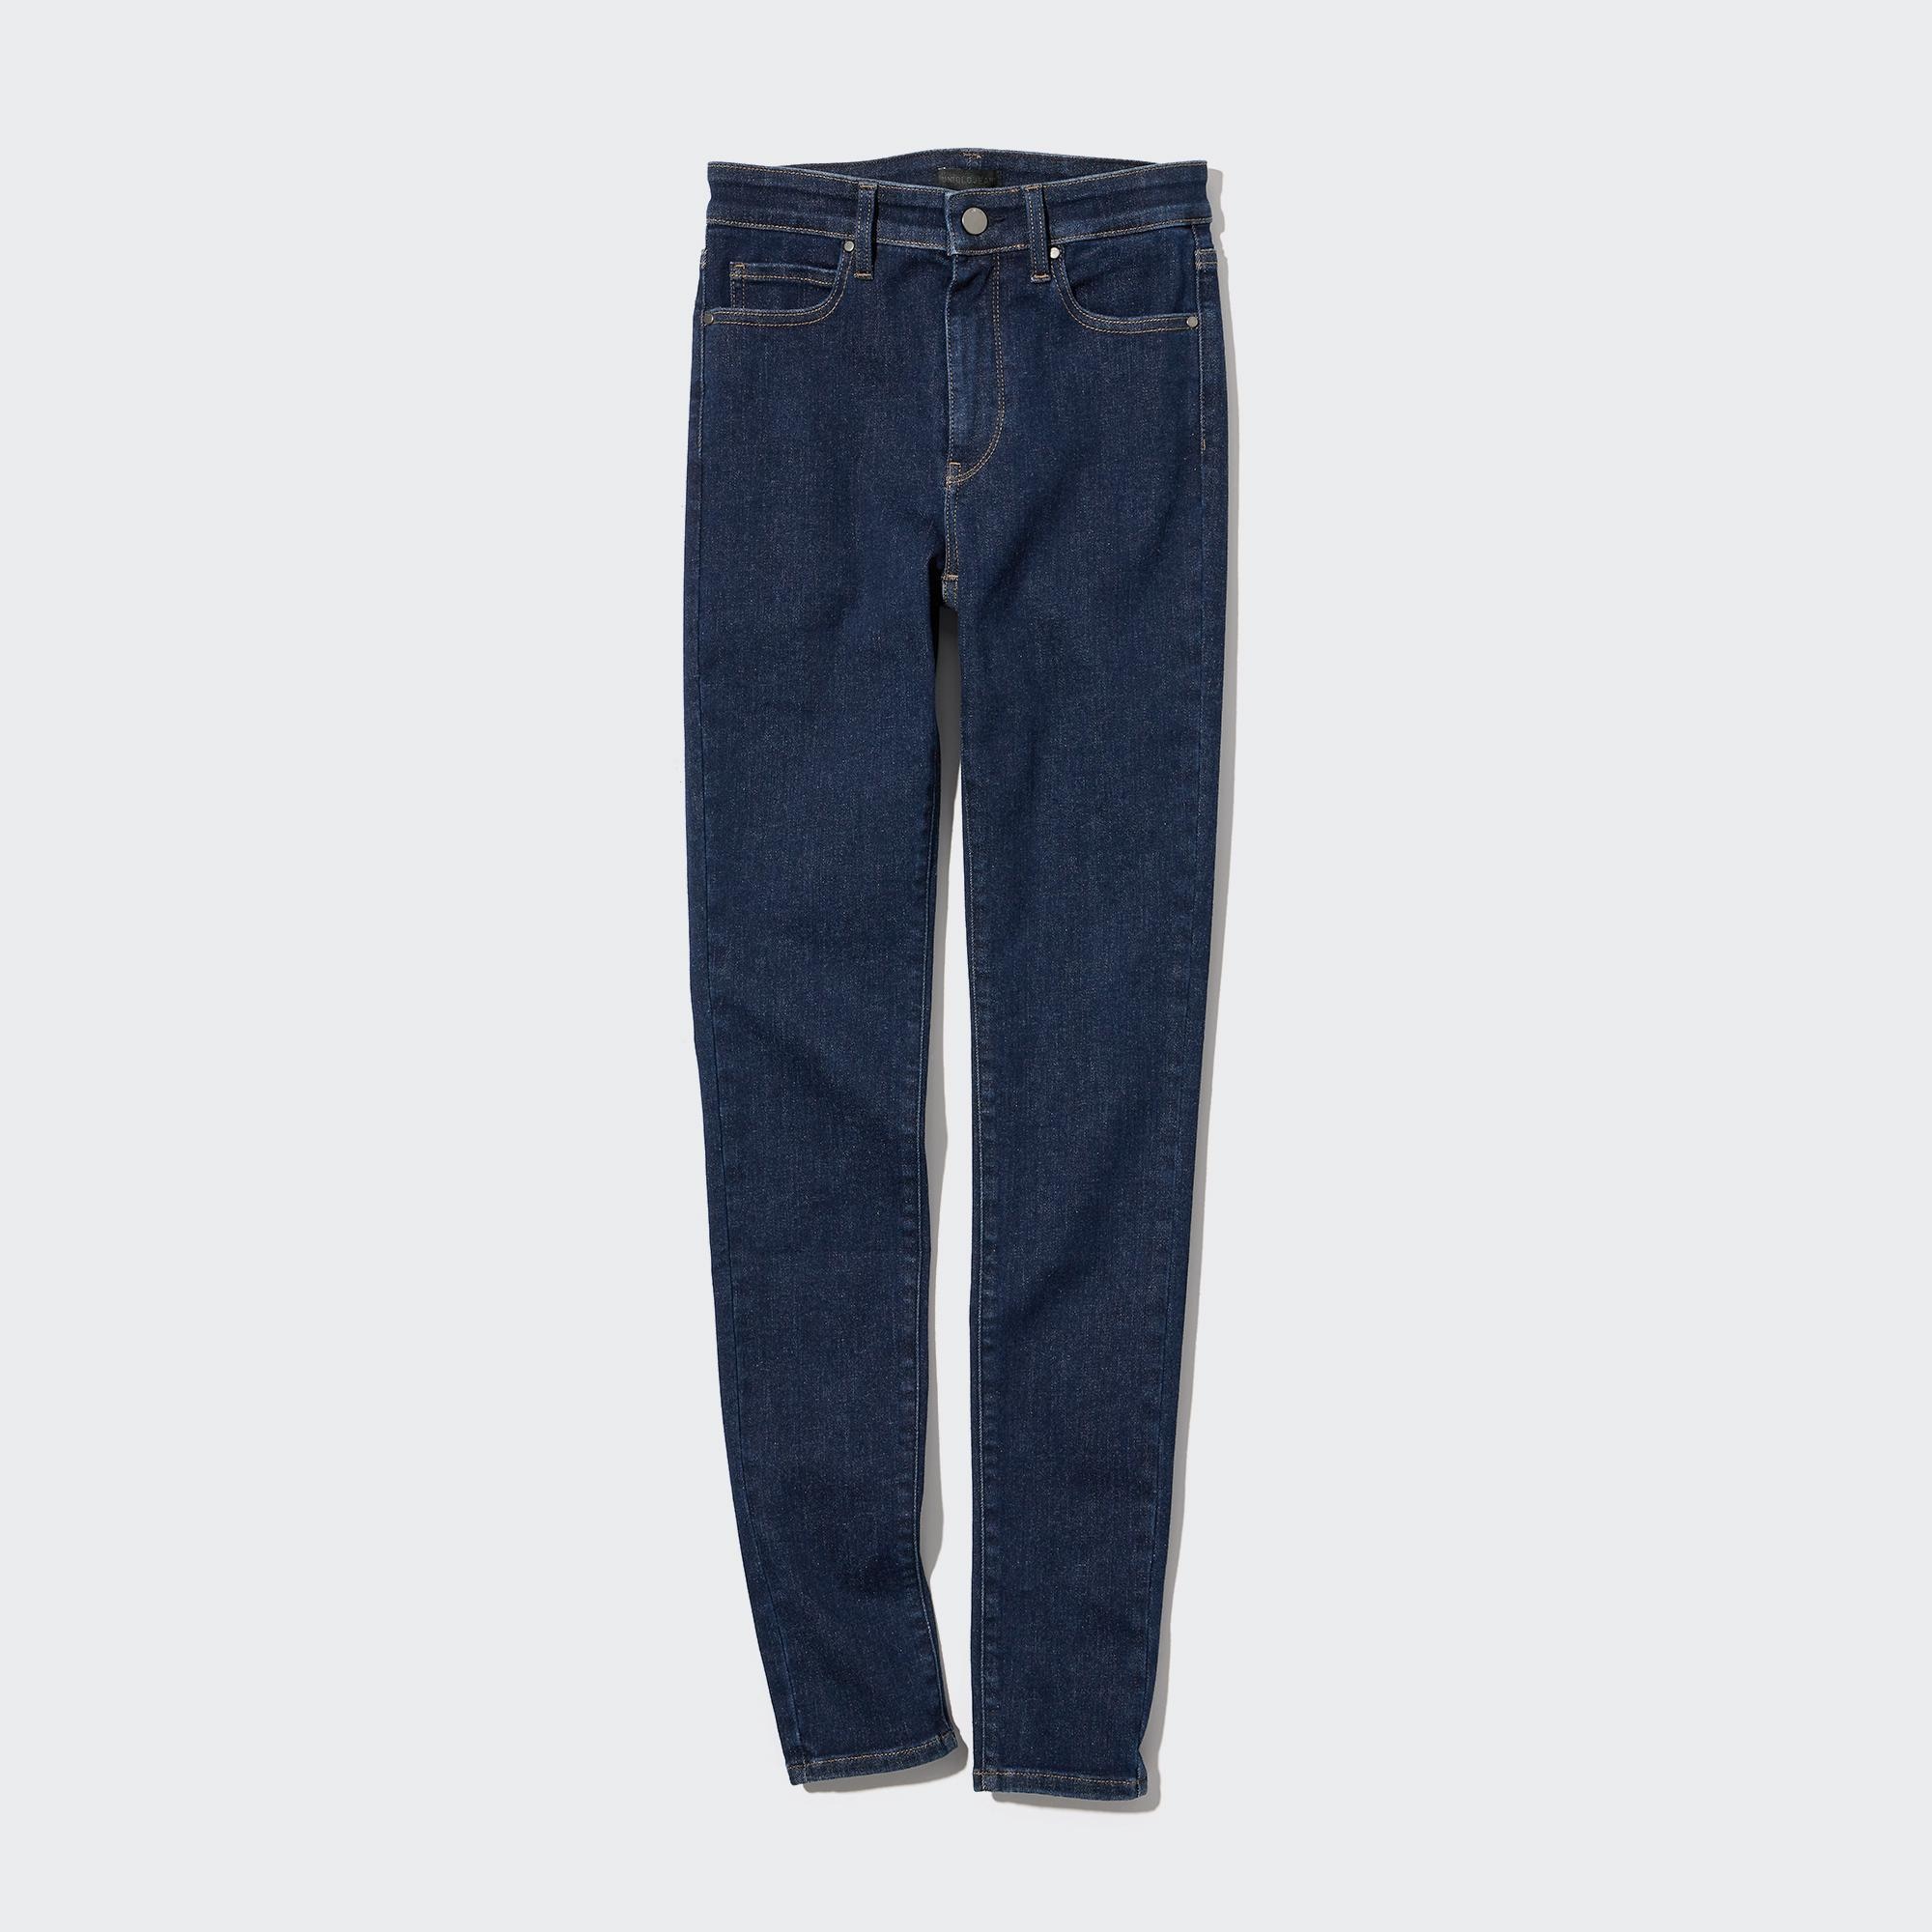 NEW UNIQLO Dark Wash Blue Jeans Ultra Stretch Super Skinny Fitted Ankle SZ  26  eBay